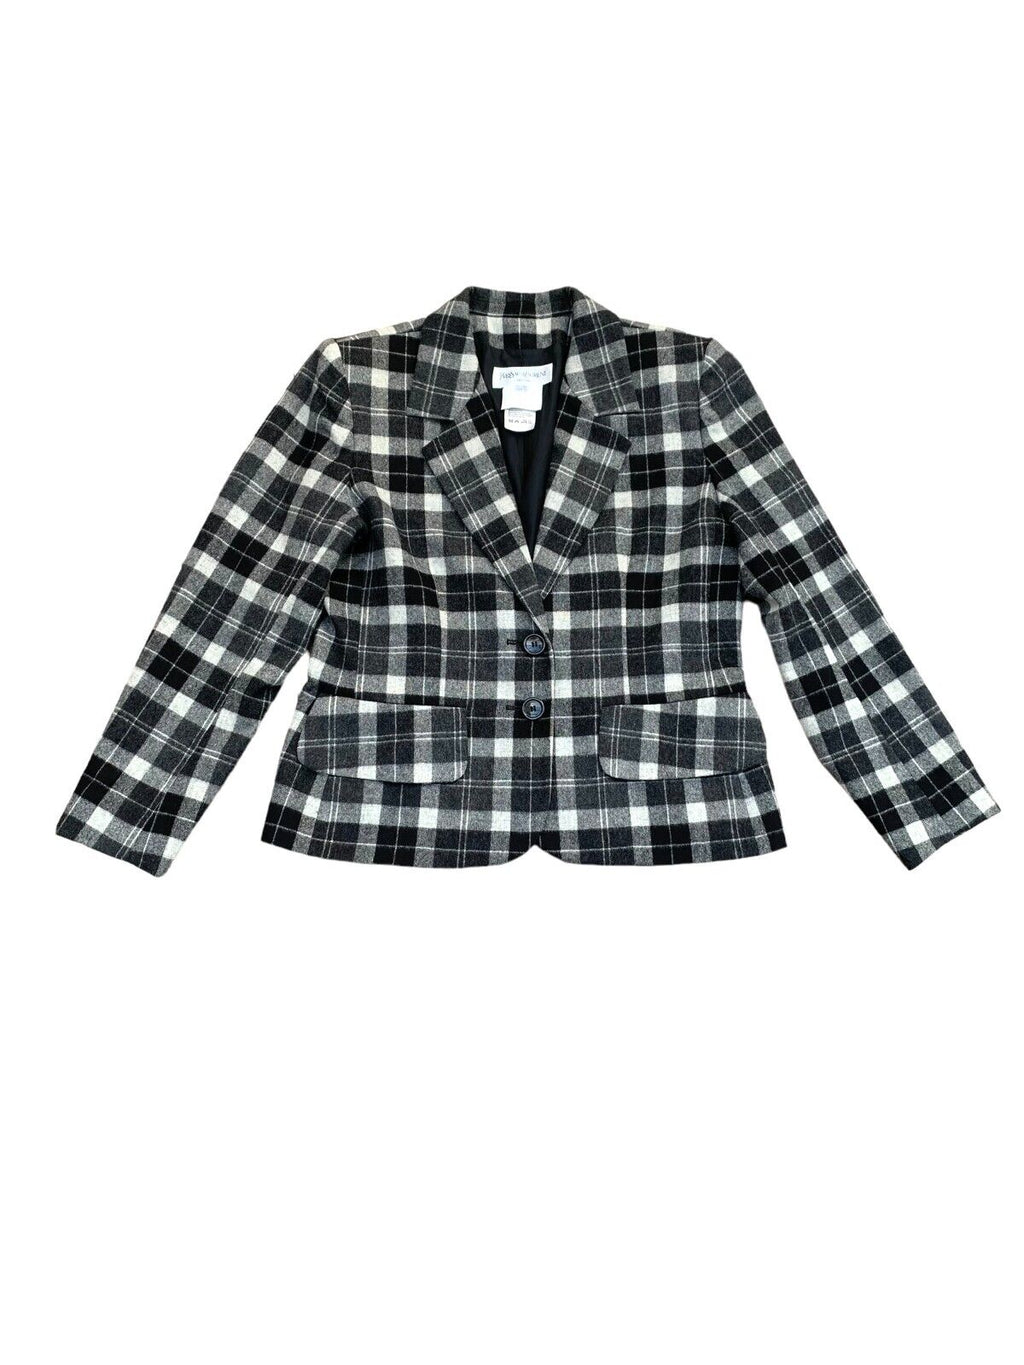 Grey Checkered Blazer Jacket